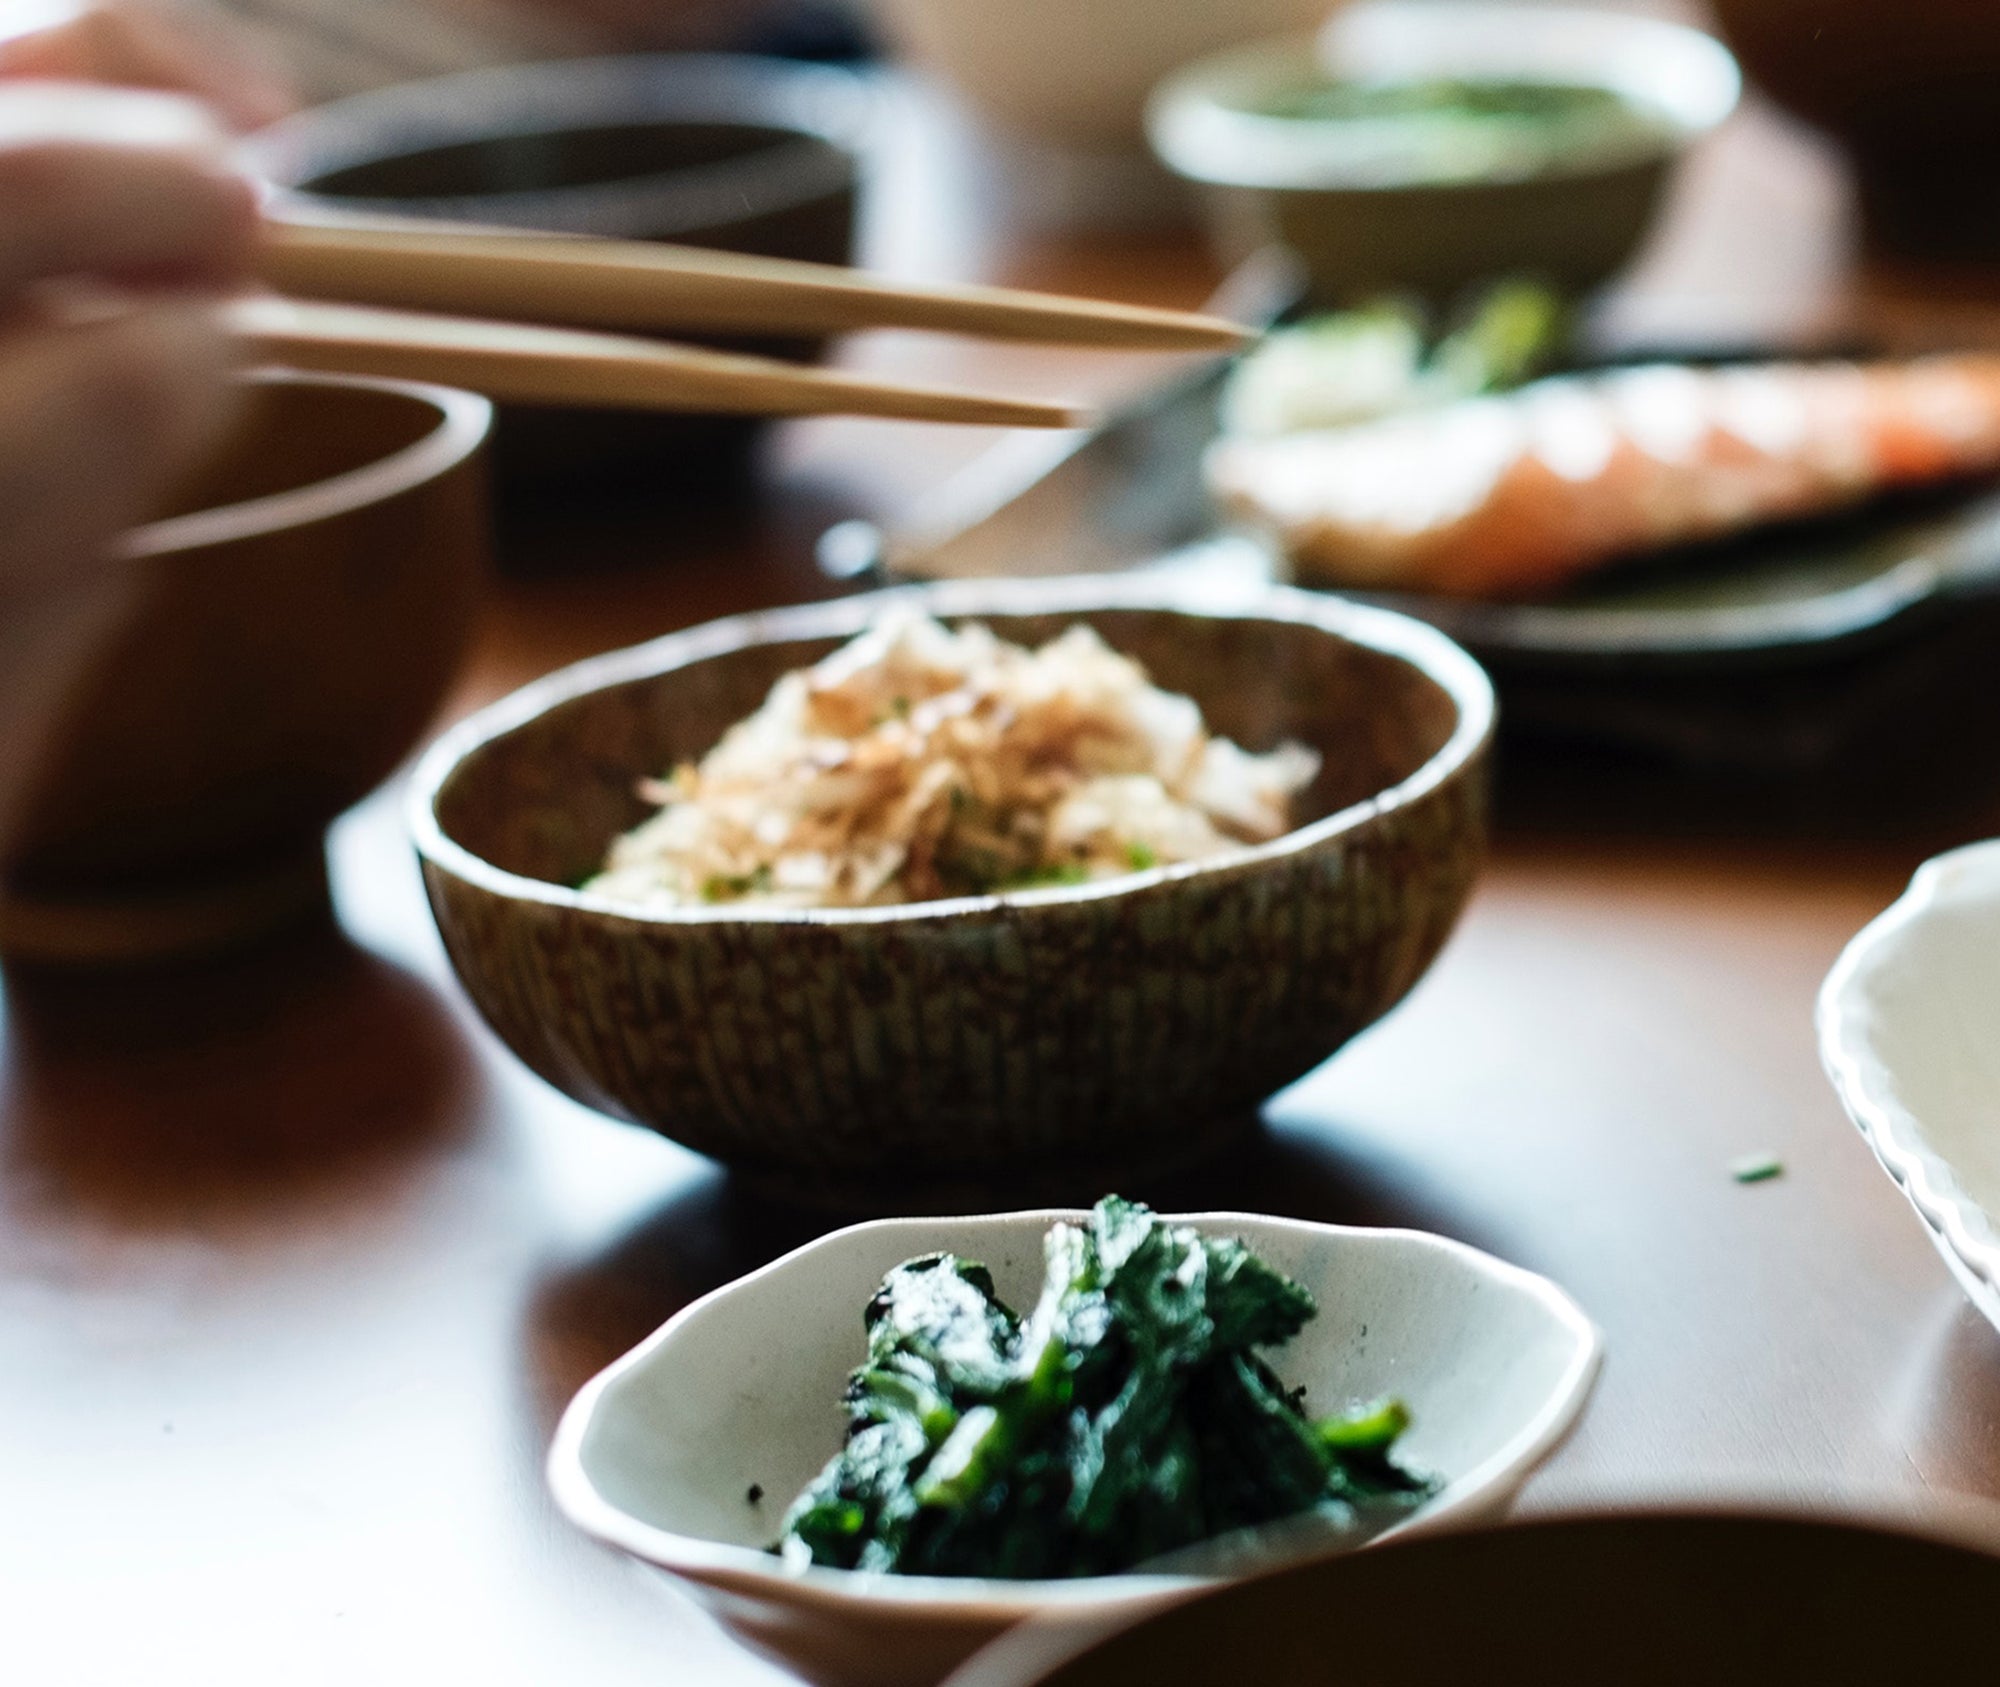 Zen Minded Japanese Traditional Matcha Tea Bowl Ceramic with Sapporo Glaze